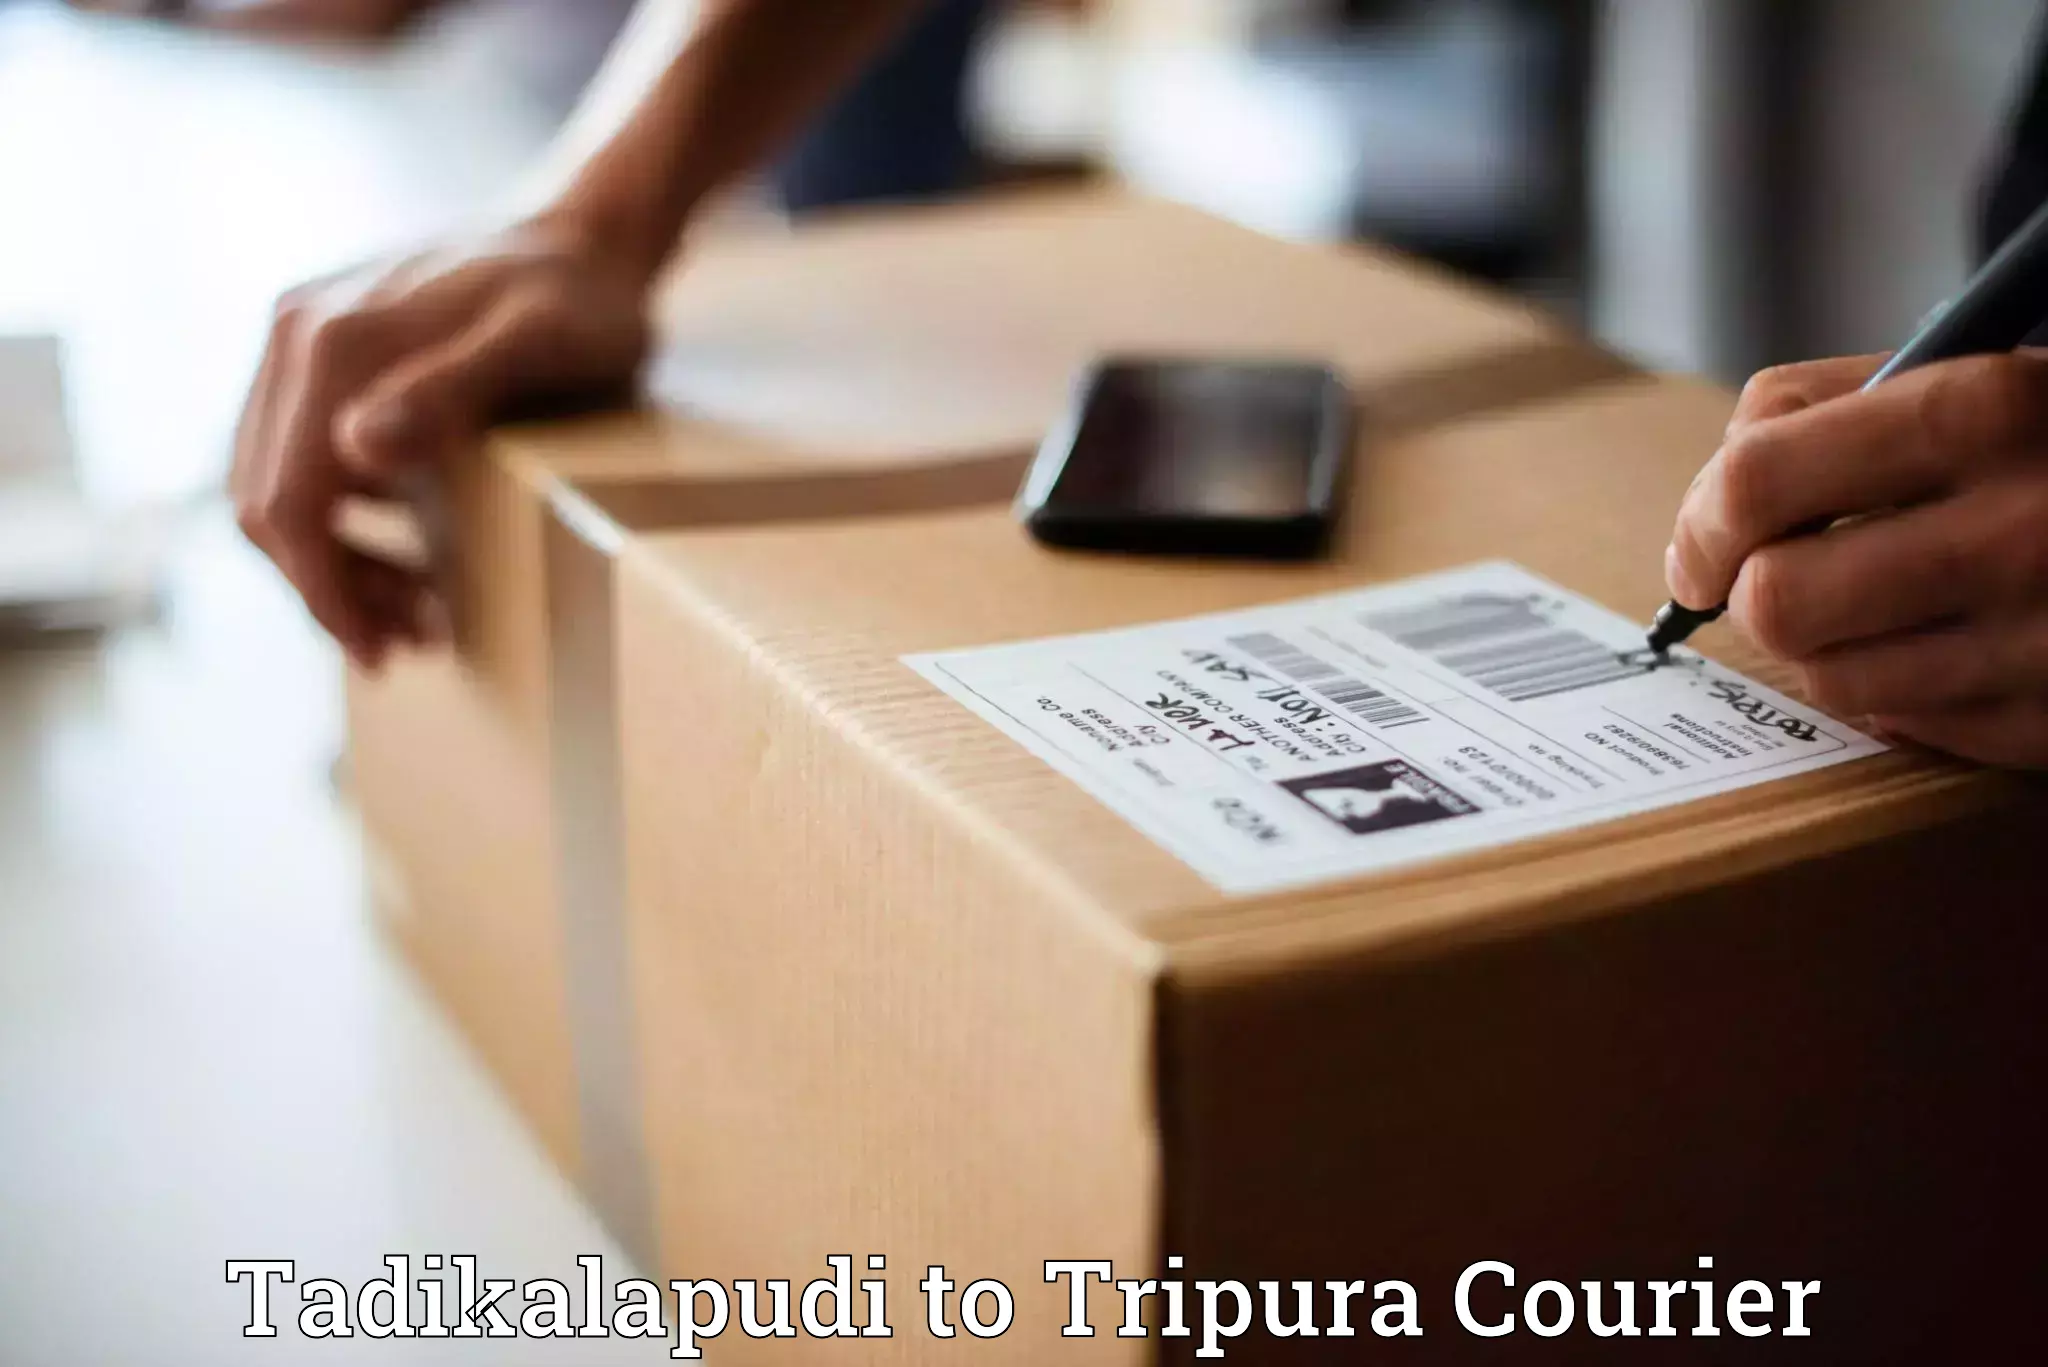 Bulk courier orders Tadikalapudi to Tripura